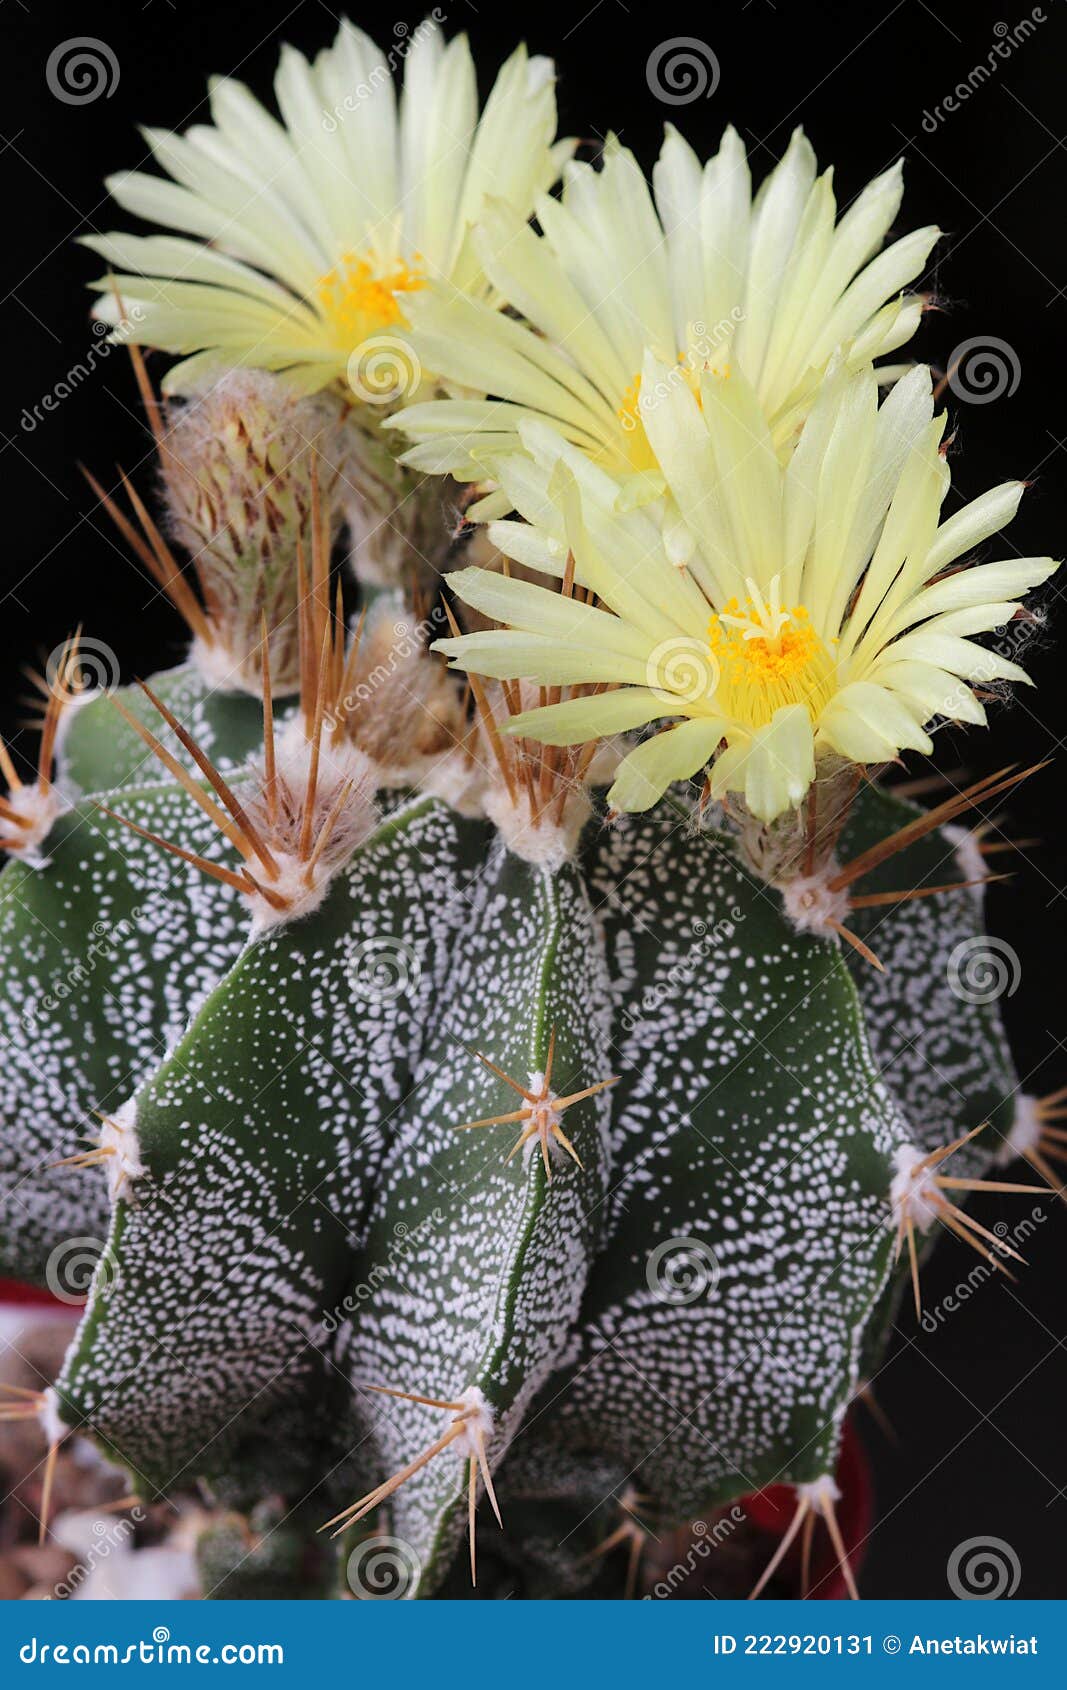 yellow cactus flawers of astrophytum ornatum